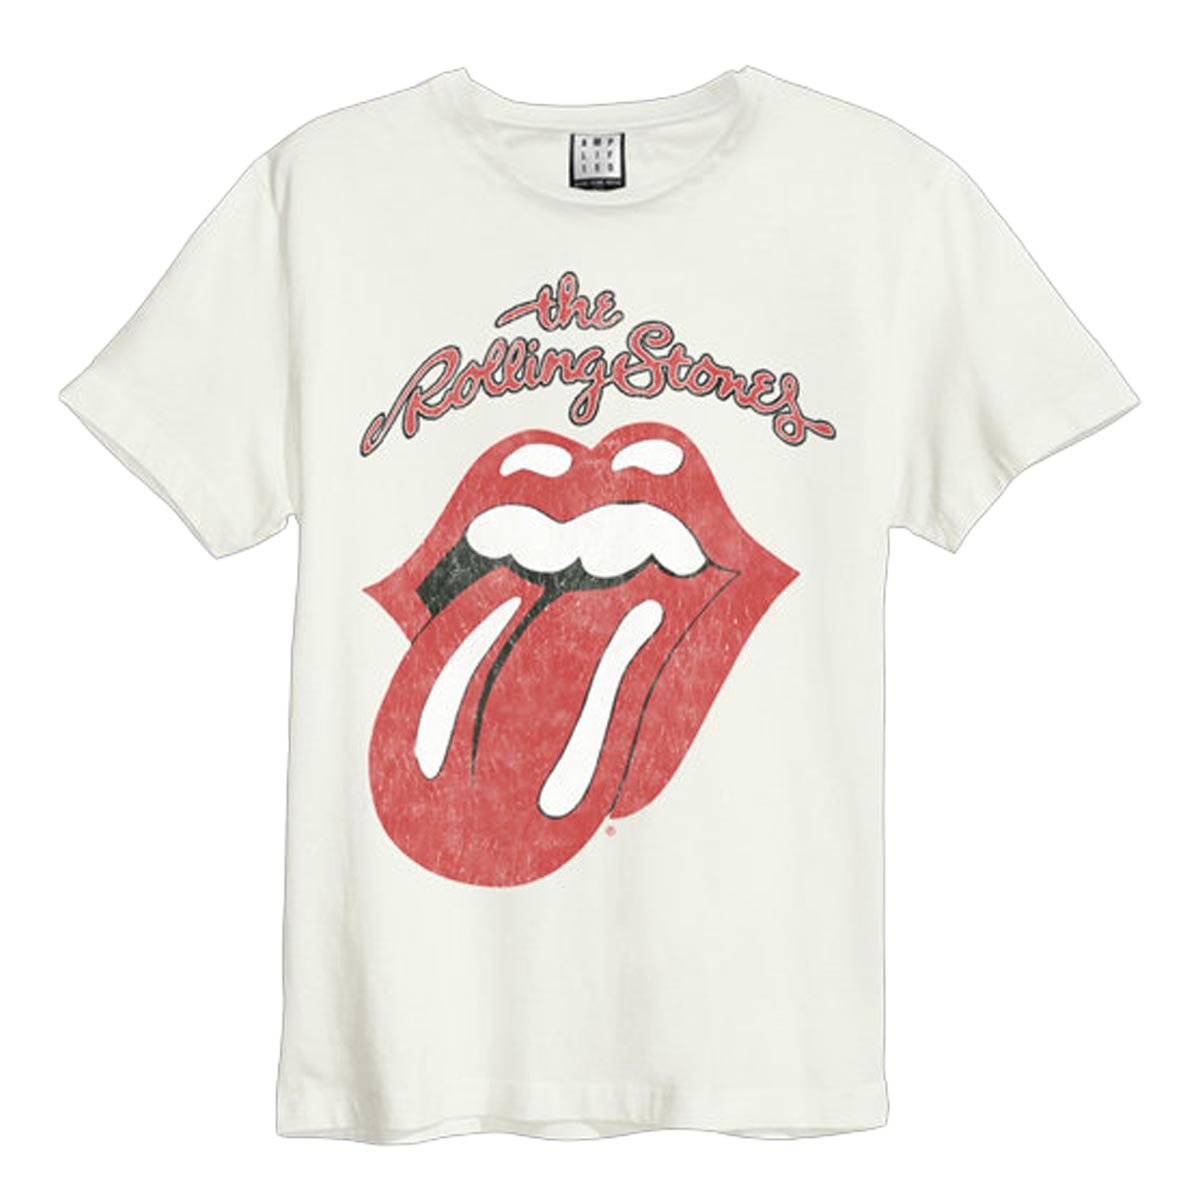 NUEVO The Rolling Stones 'Vintage' Camiseta para niños Amplified Clothing 